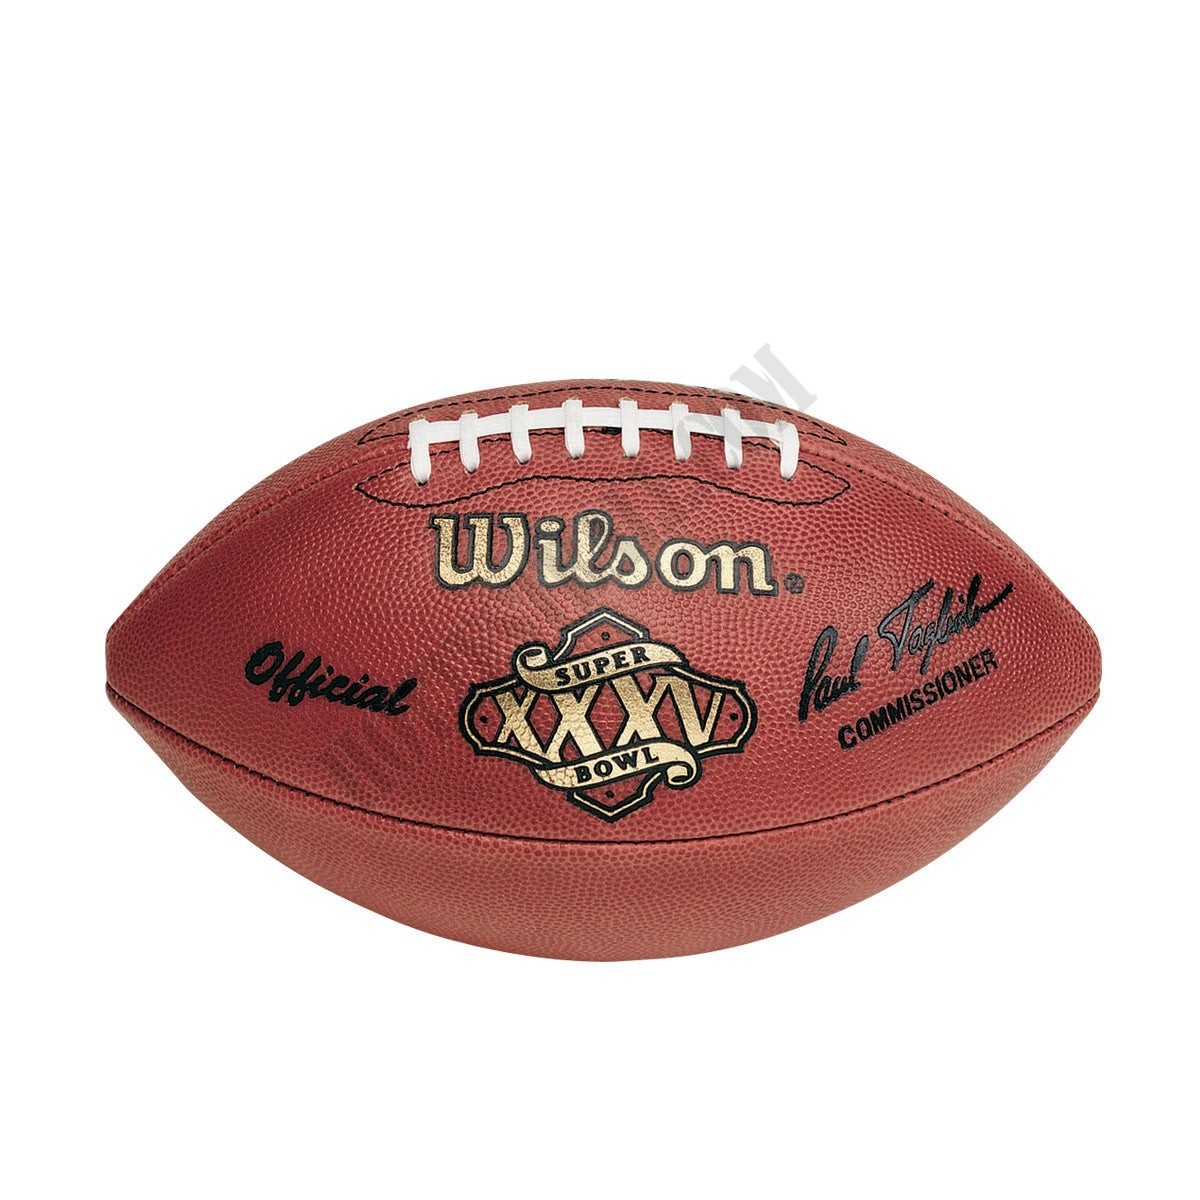 Super Bowl XXXV Game Football - Baltimore Ravens ● Wilson Promotions - Super Bowl XXXV Game Football - Baltimore Ravens ● Wilson Promotions